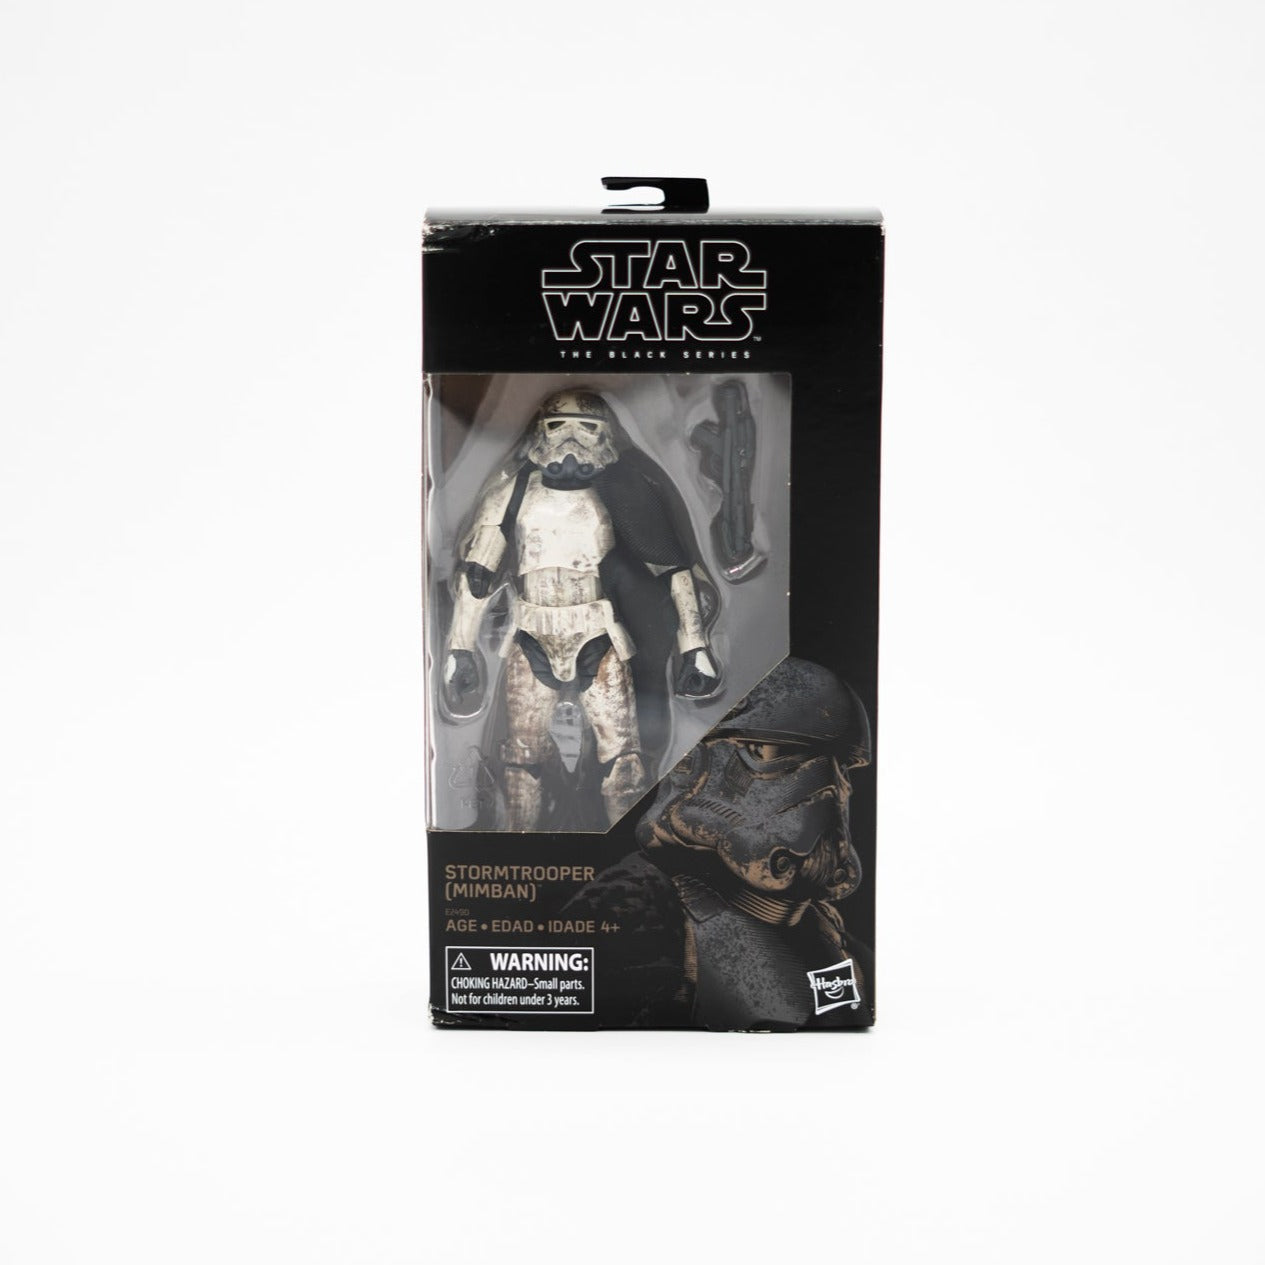 Star Wars: The Black Series Stormtrooper (Mimban) Detalles en caja